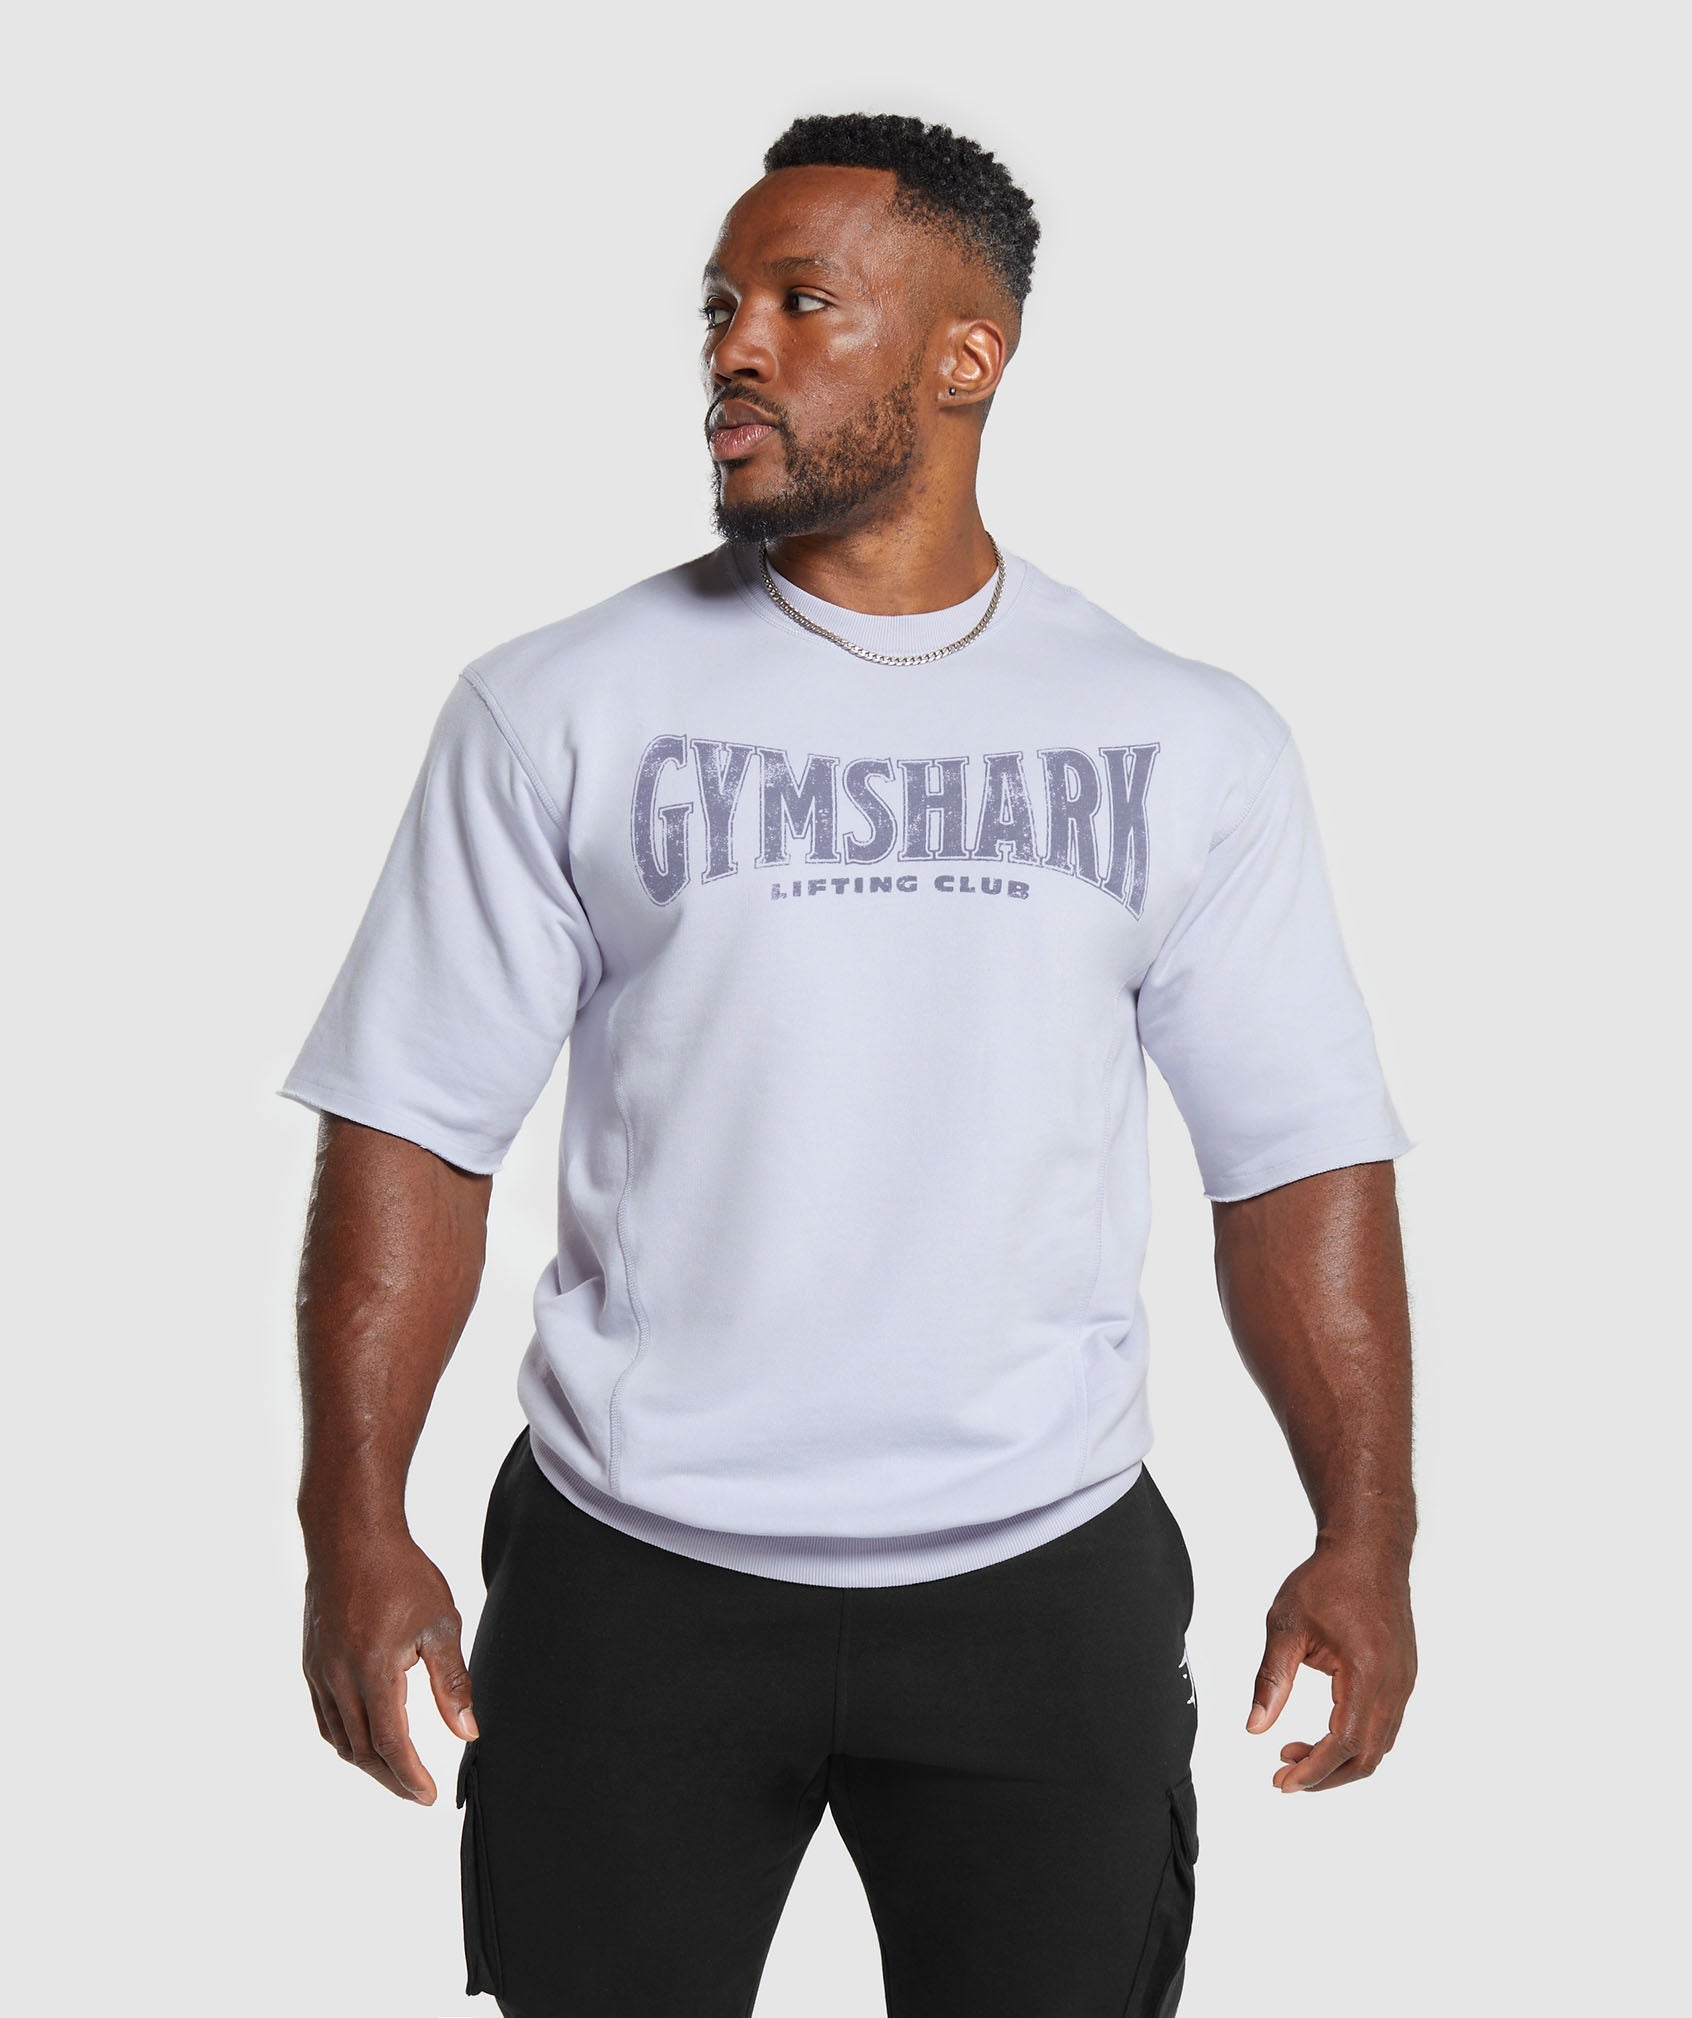 Gymshark Weightlifting Club T-Shirt - Black